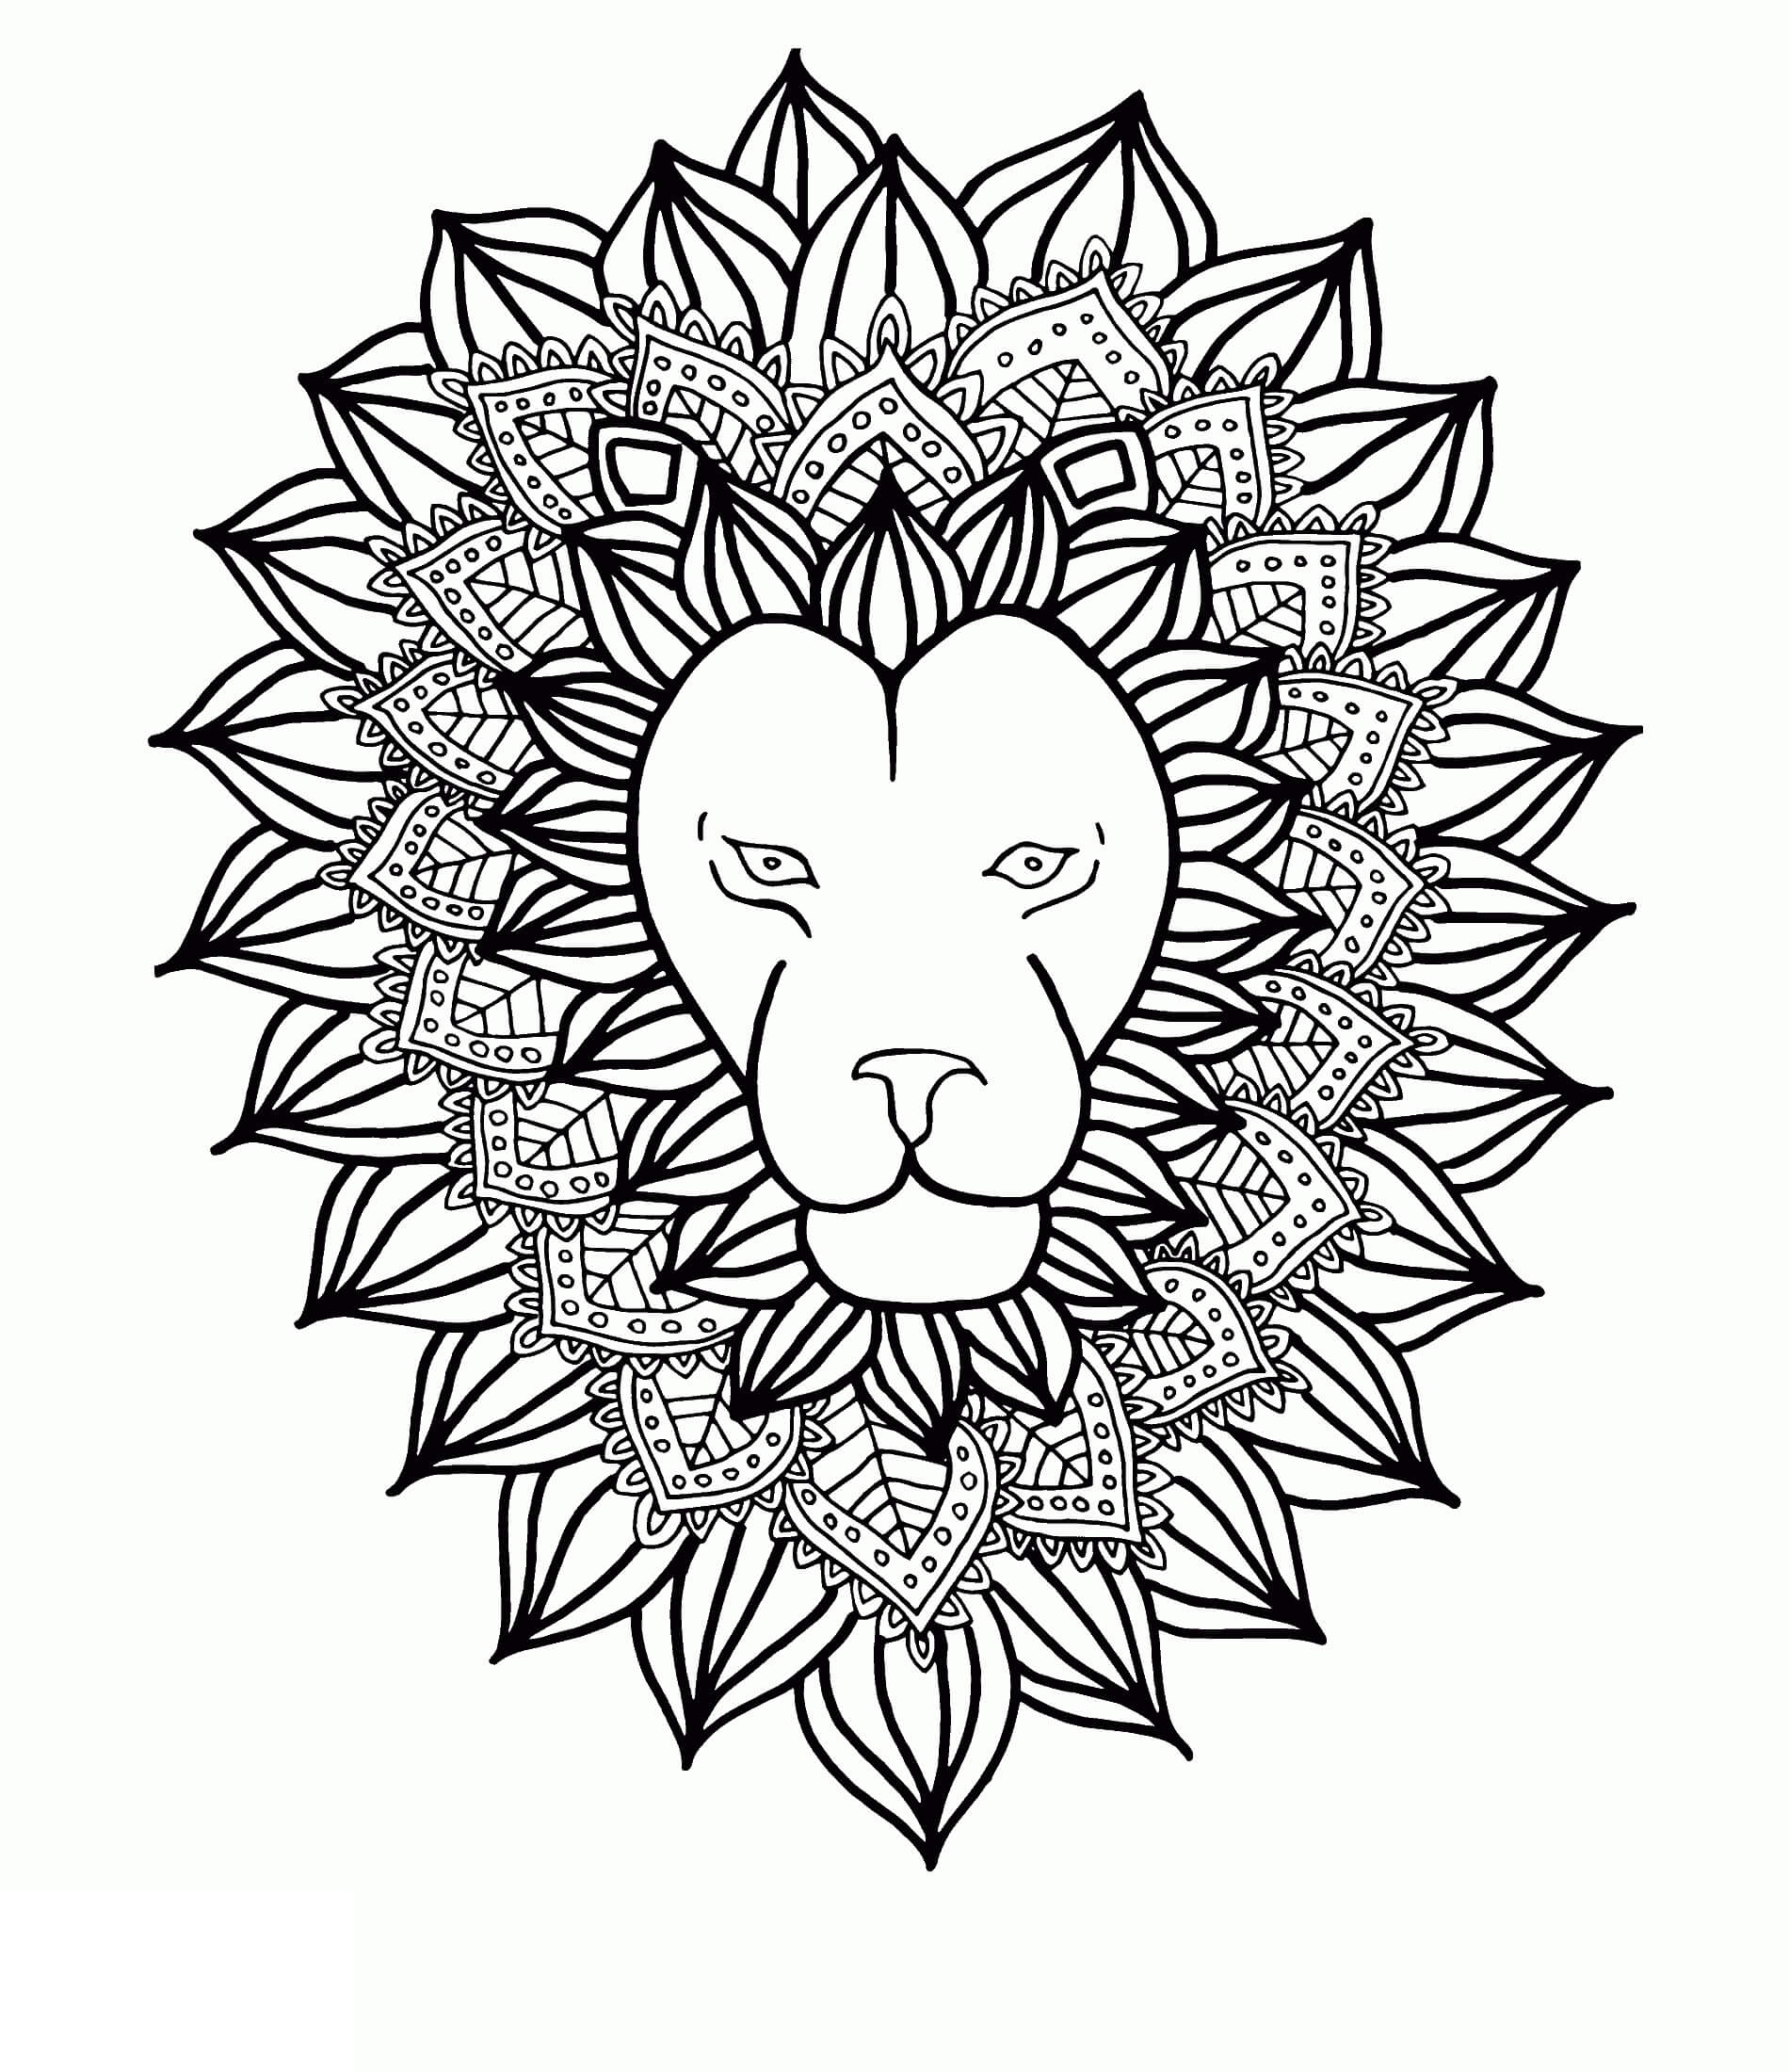 Mandala Lion Coloring Page - Sheet 7 Mandalas